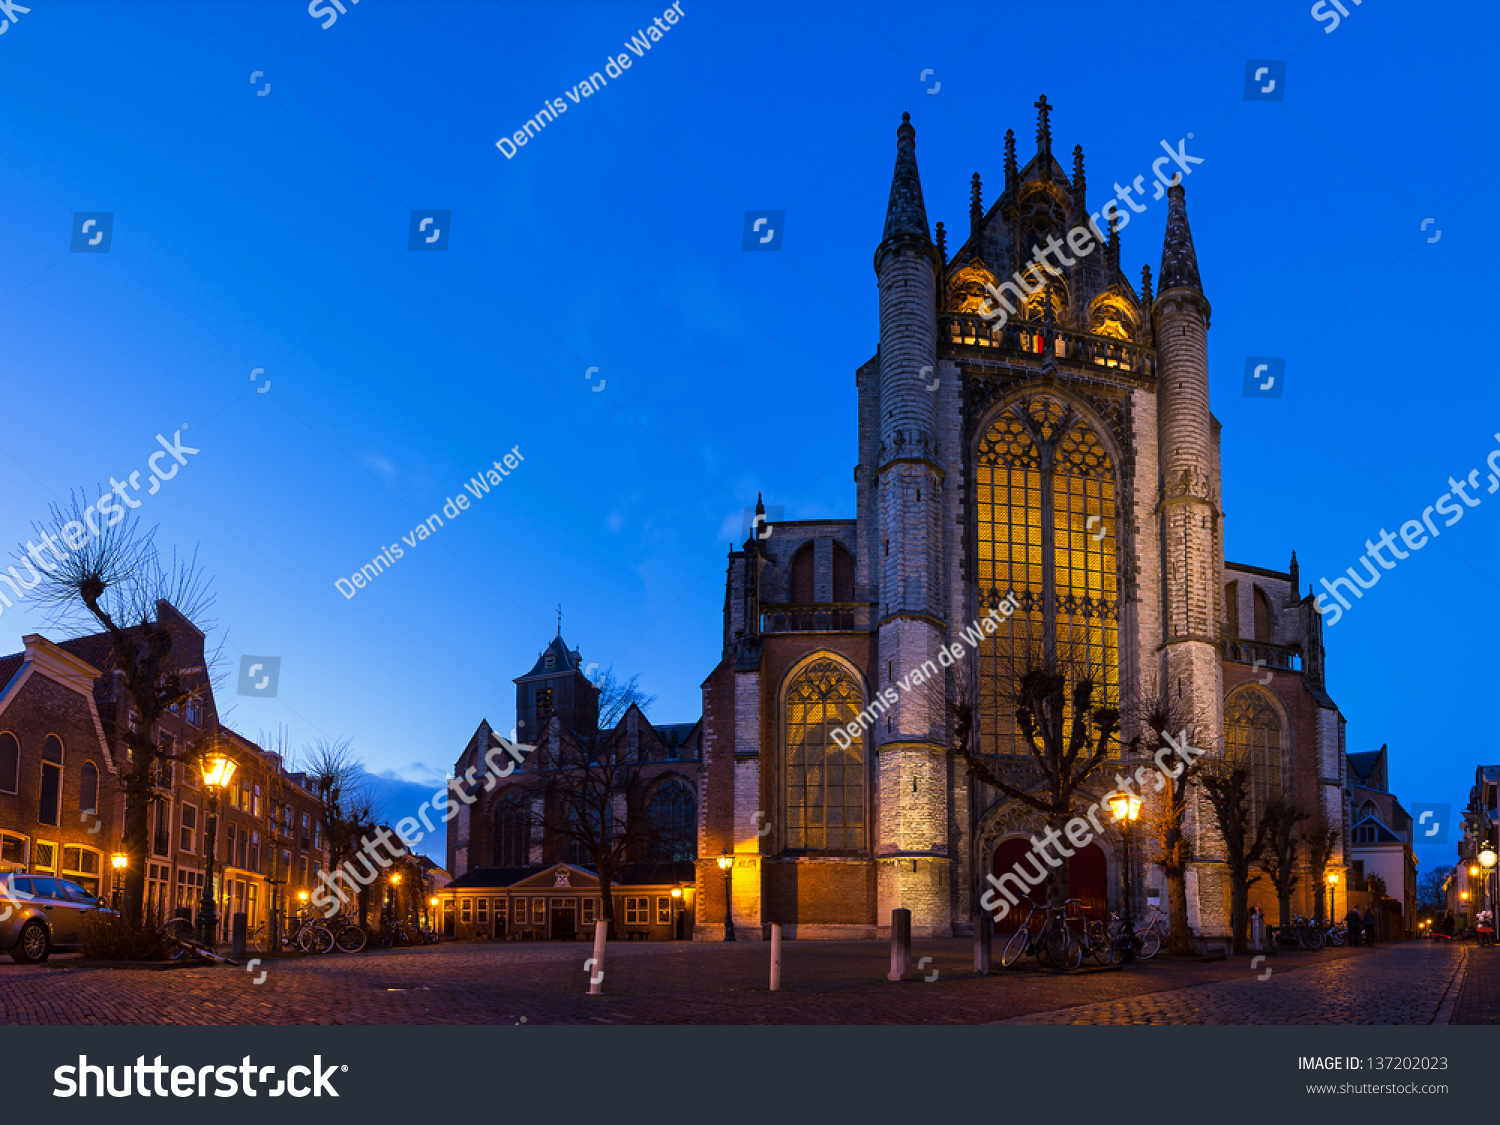 Panorama of the front of the 'Hooglandse kerk' church in Leiden at twilight #137202023